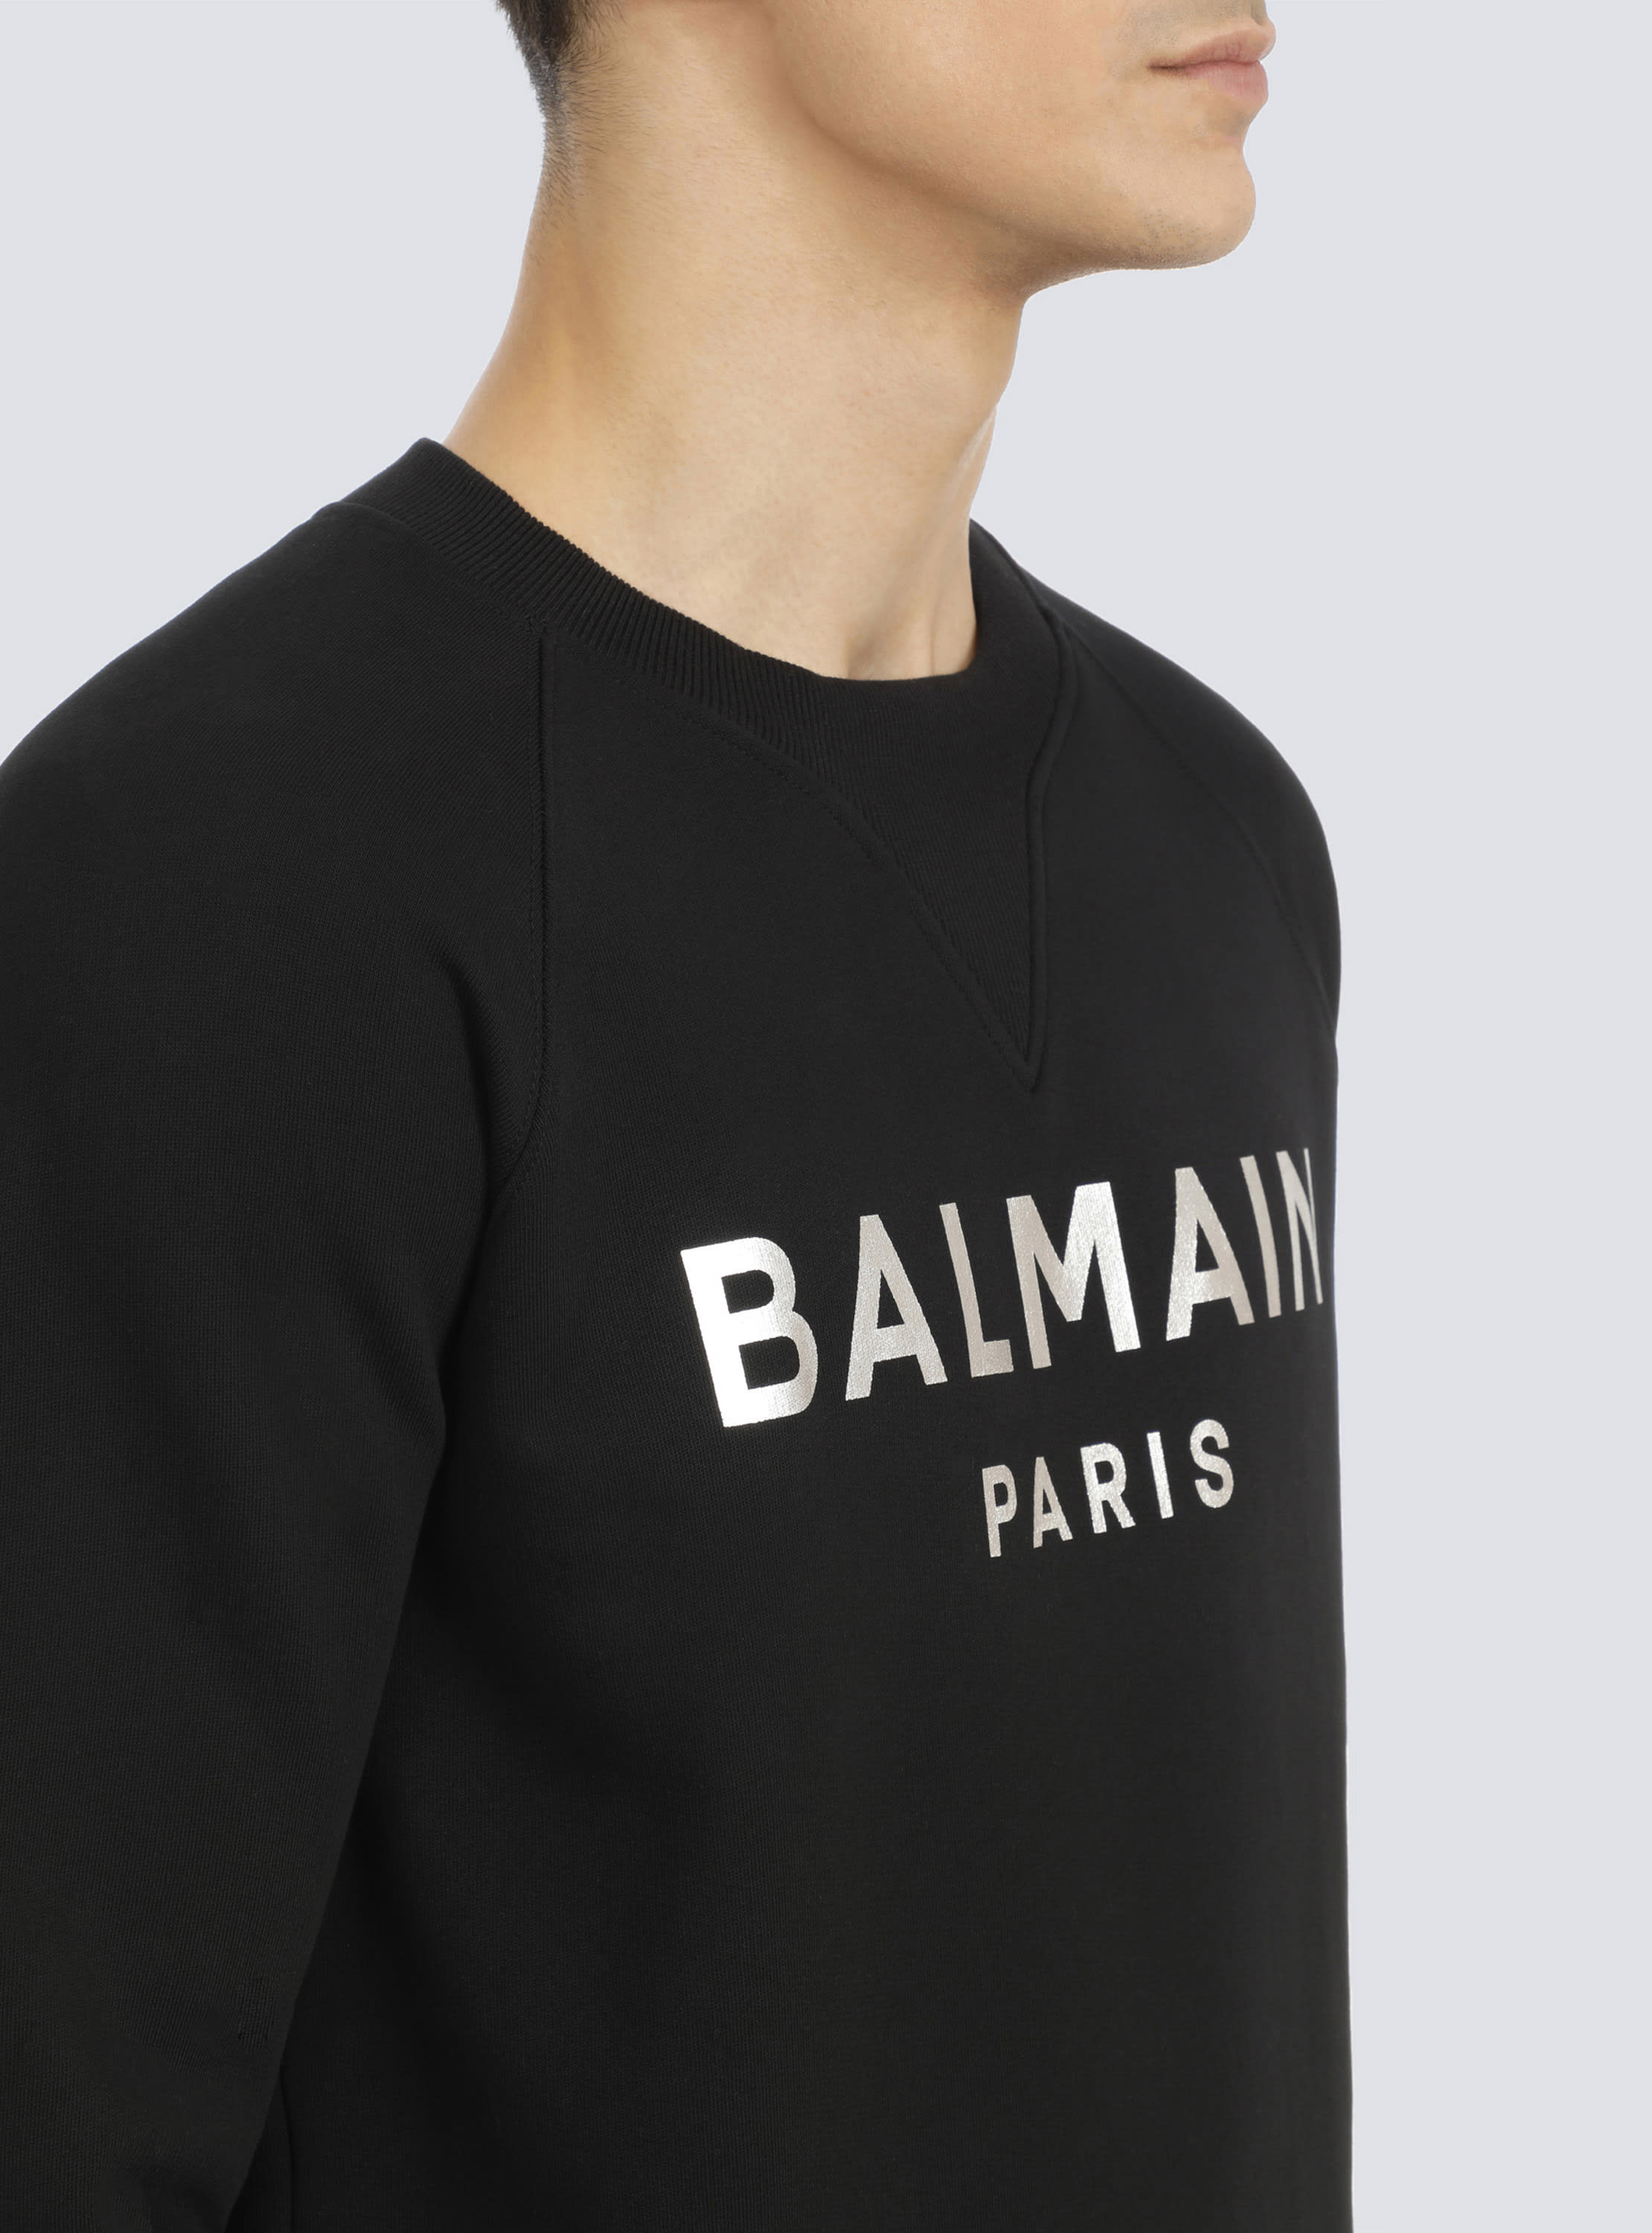 Balmain巴尔曼金属标志印花环保设计棉质运动衫